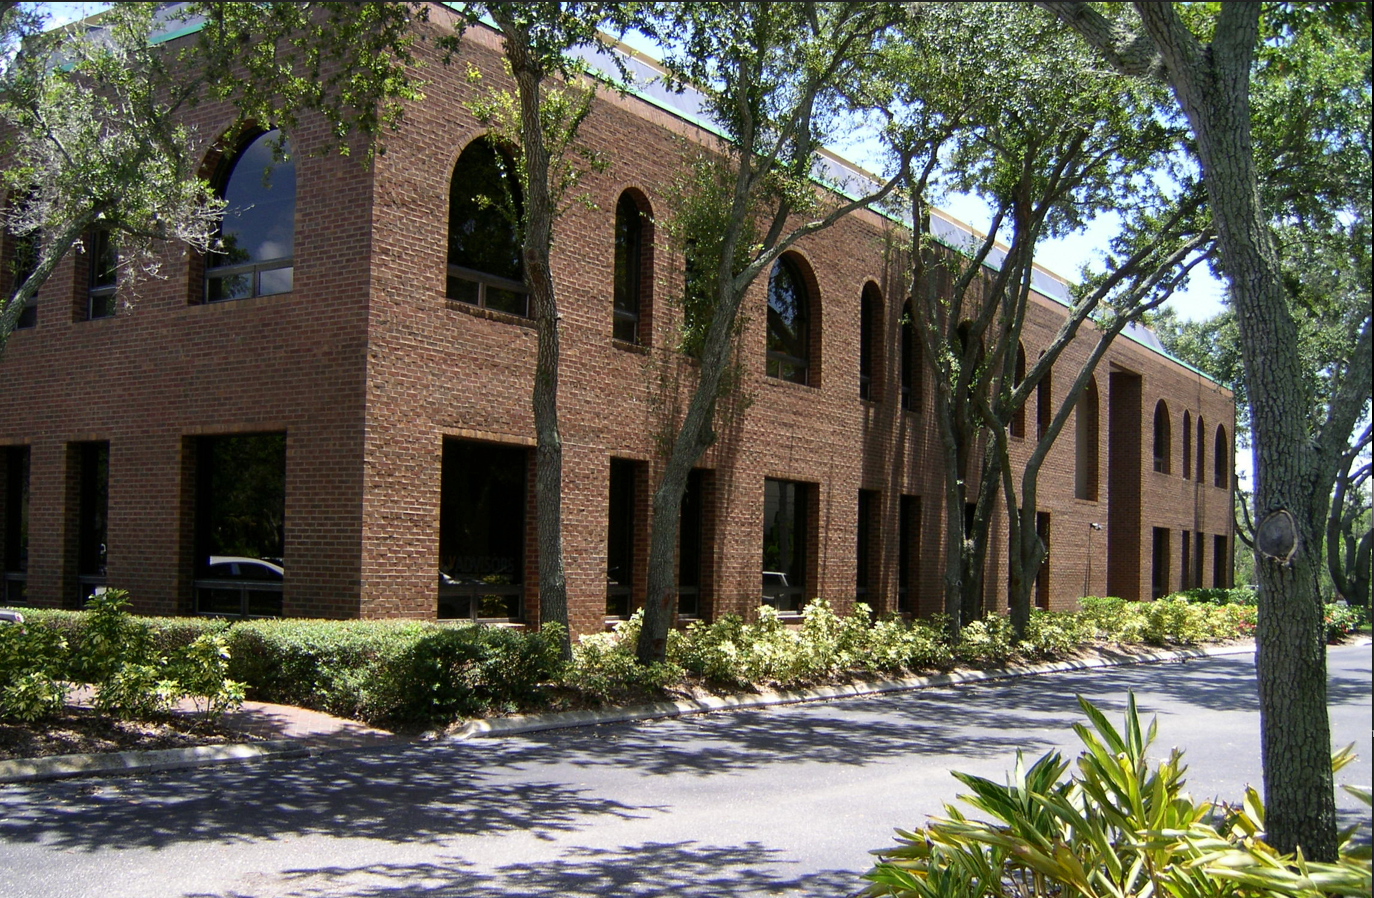 Wood Street Office Building in Sarasota, FL